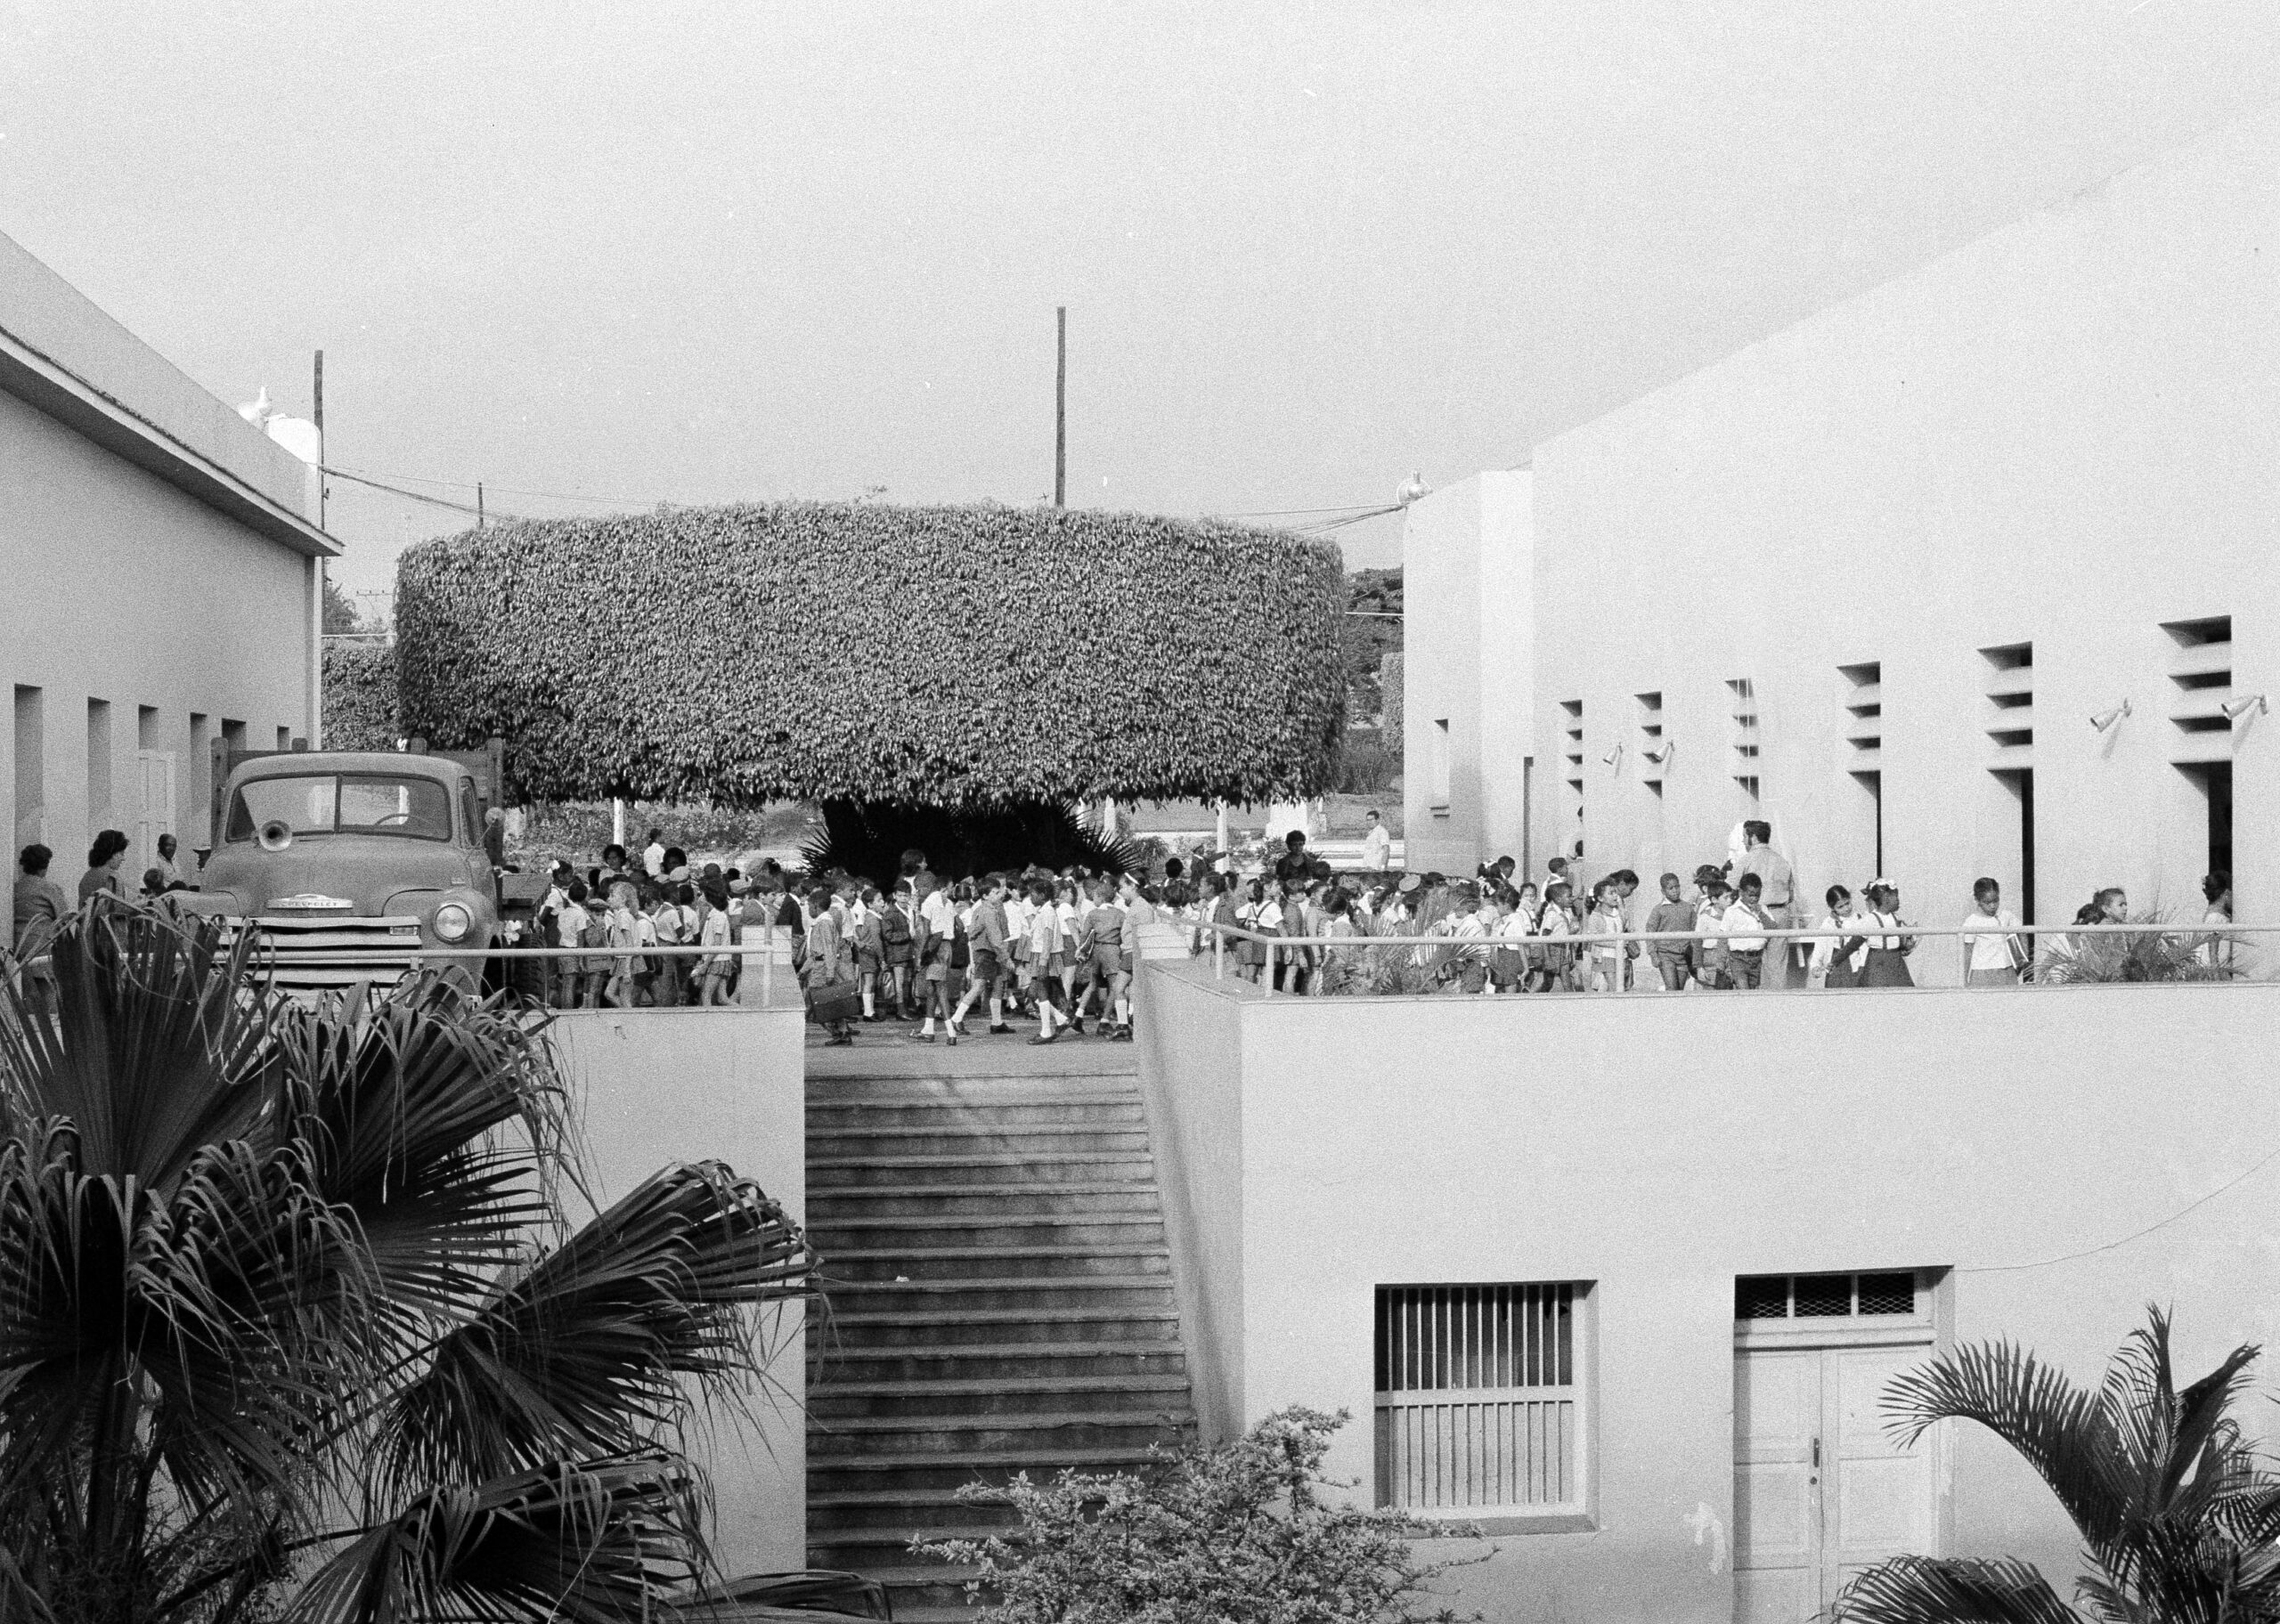 Cuban school children crowd around the entrance to their school in Santiago, Cuba, April 5, 1977